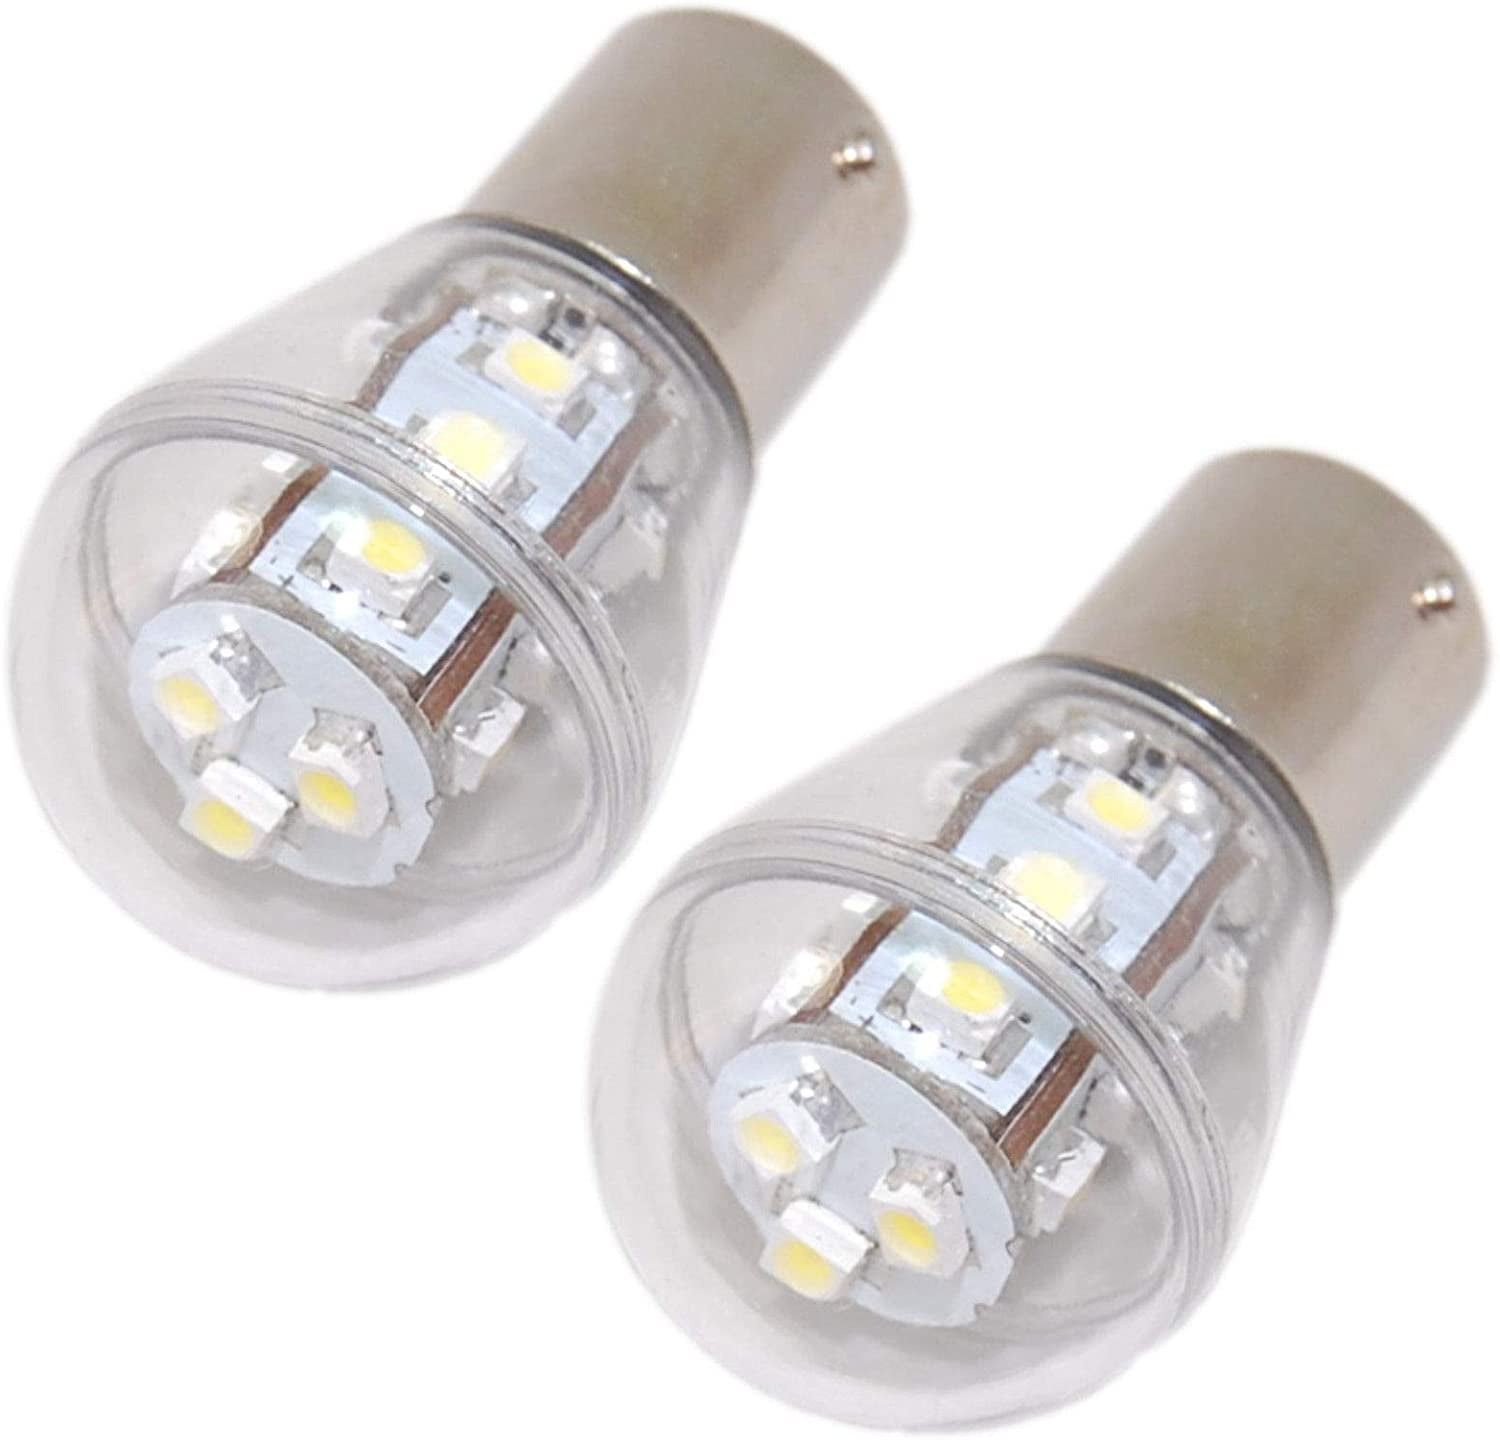 2 SUPER BRIGHT LED light bulbs Troy-Bilt Suburban headlights tractor mower bulb 